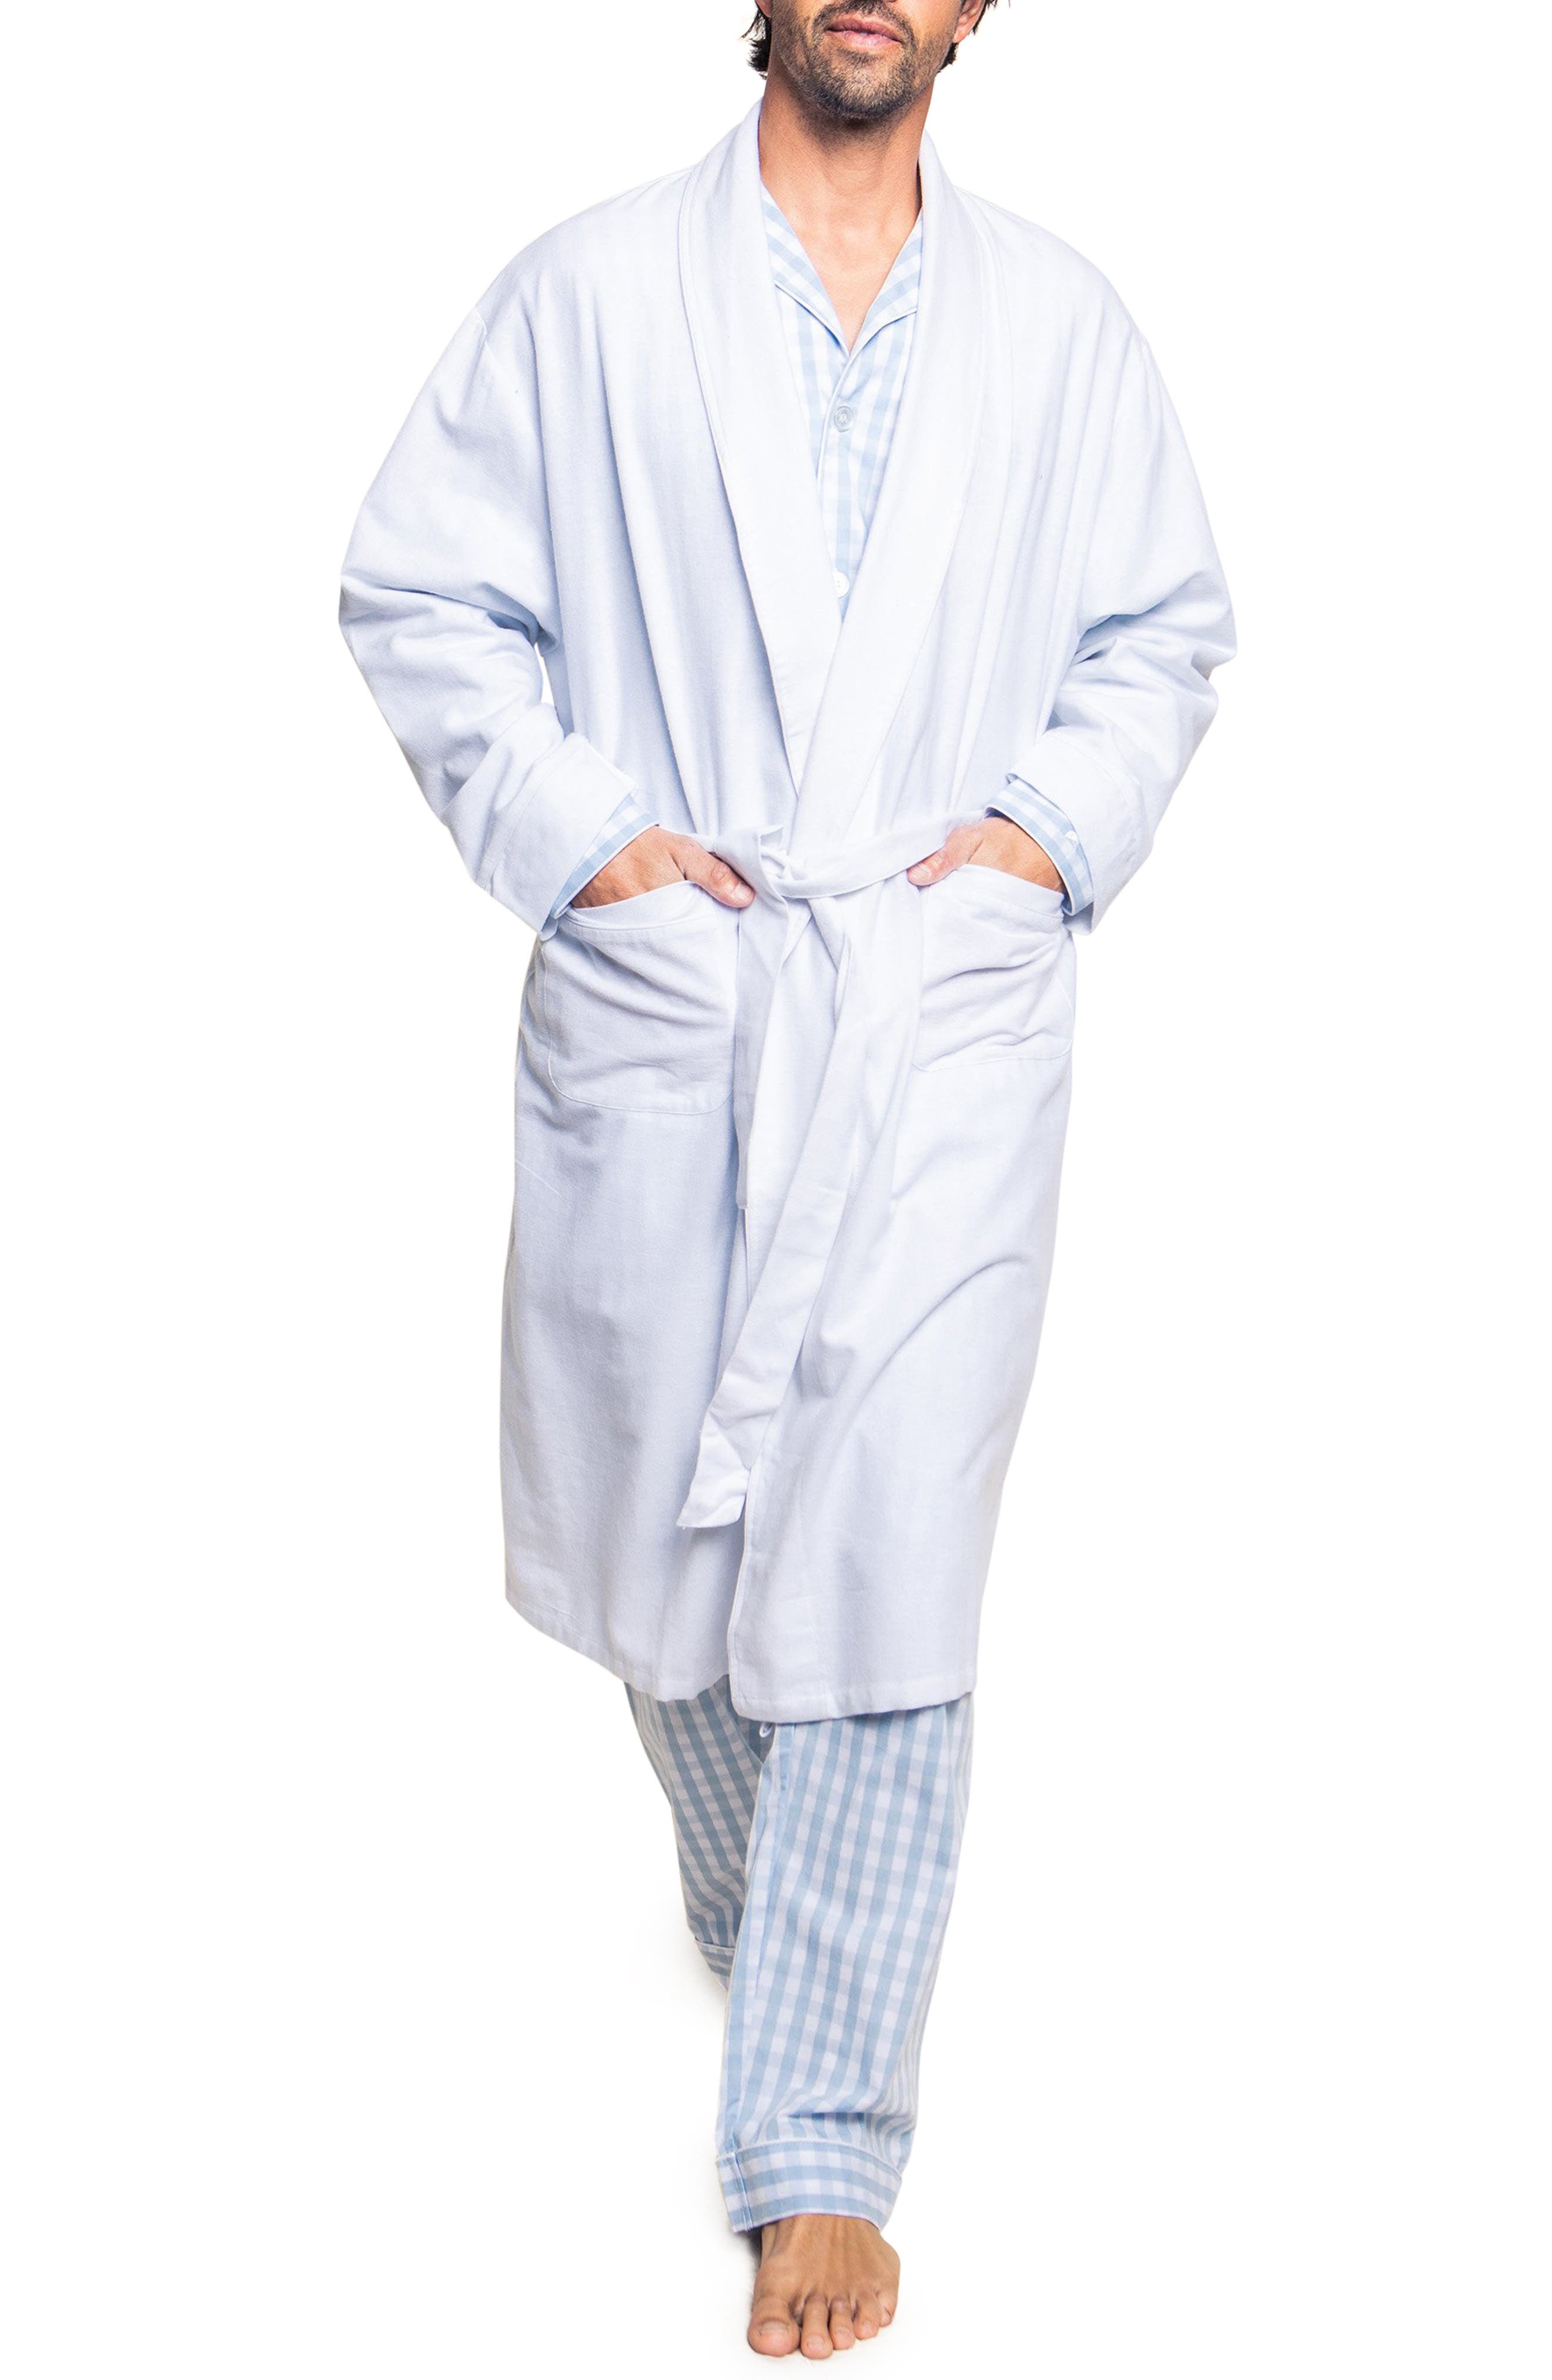 Mens Hooded Bathrobe Pajamas Robe Leisure Sleepwear Robes Fashion 4 Colors CNS-L 